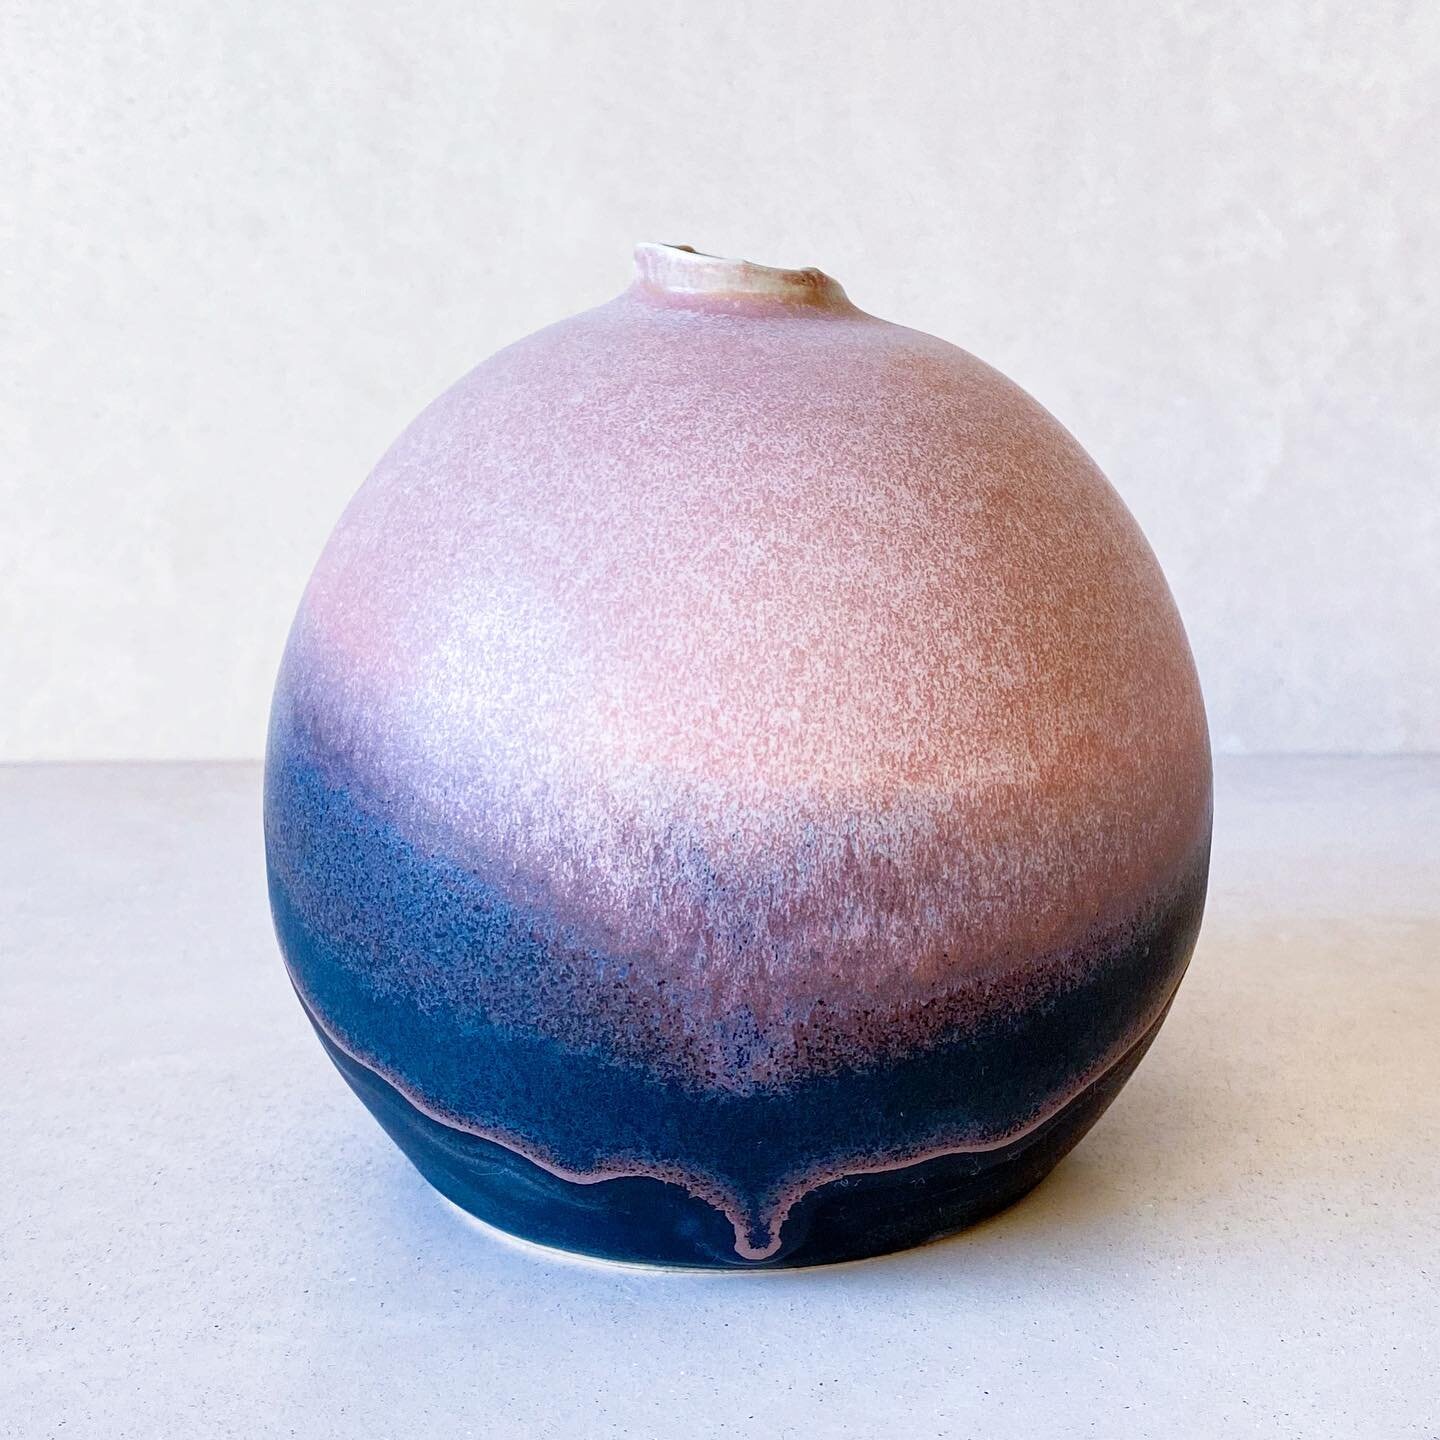 s p h e r e //
pink + black // One of my favorite vases I made few months ago. Love how the pink dripped over the black satin glaze. 
.
.
.
#ceramics #modernceramics #pinkvases #stoneware #minimalist #design #interiordesign #slowliving #homedecor #wa